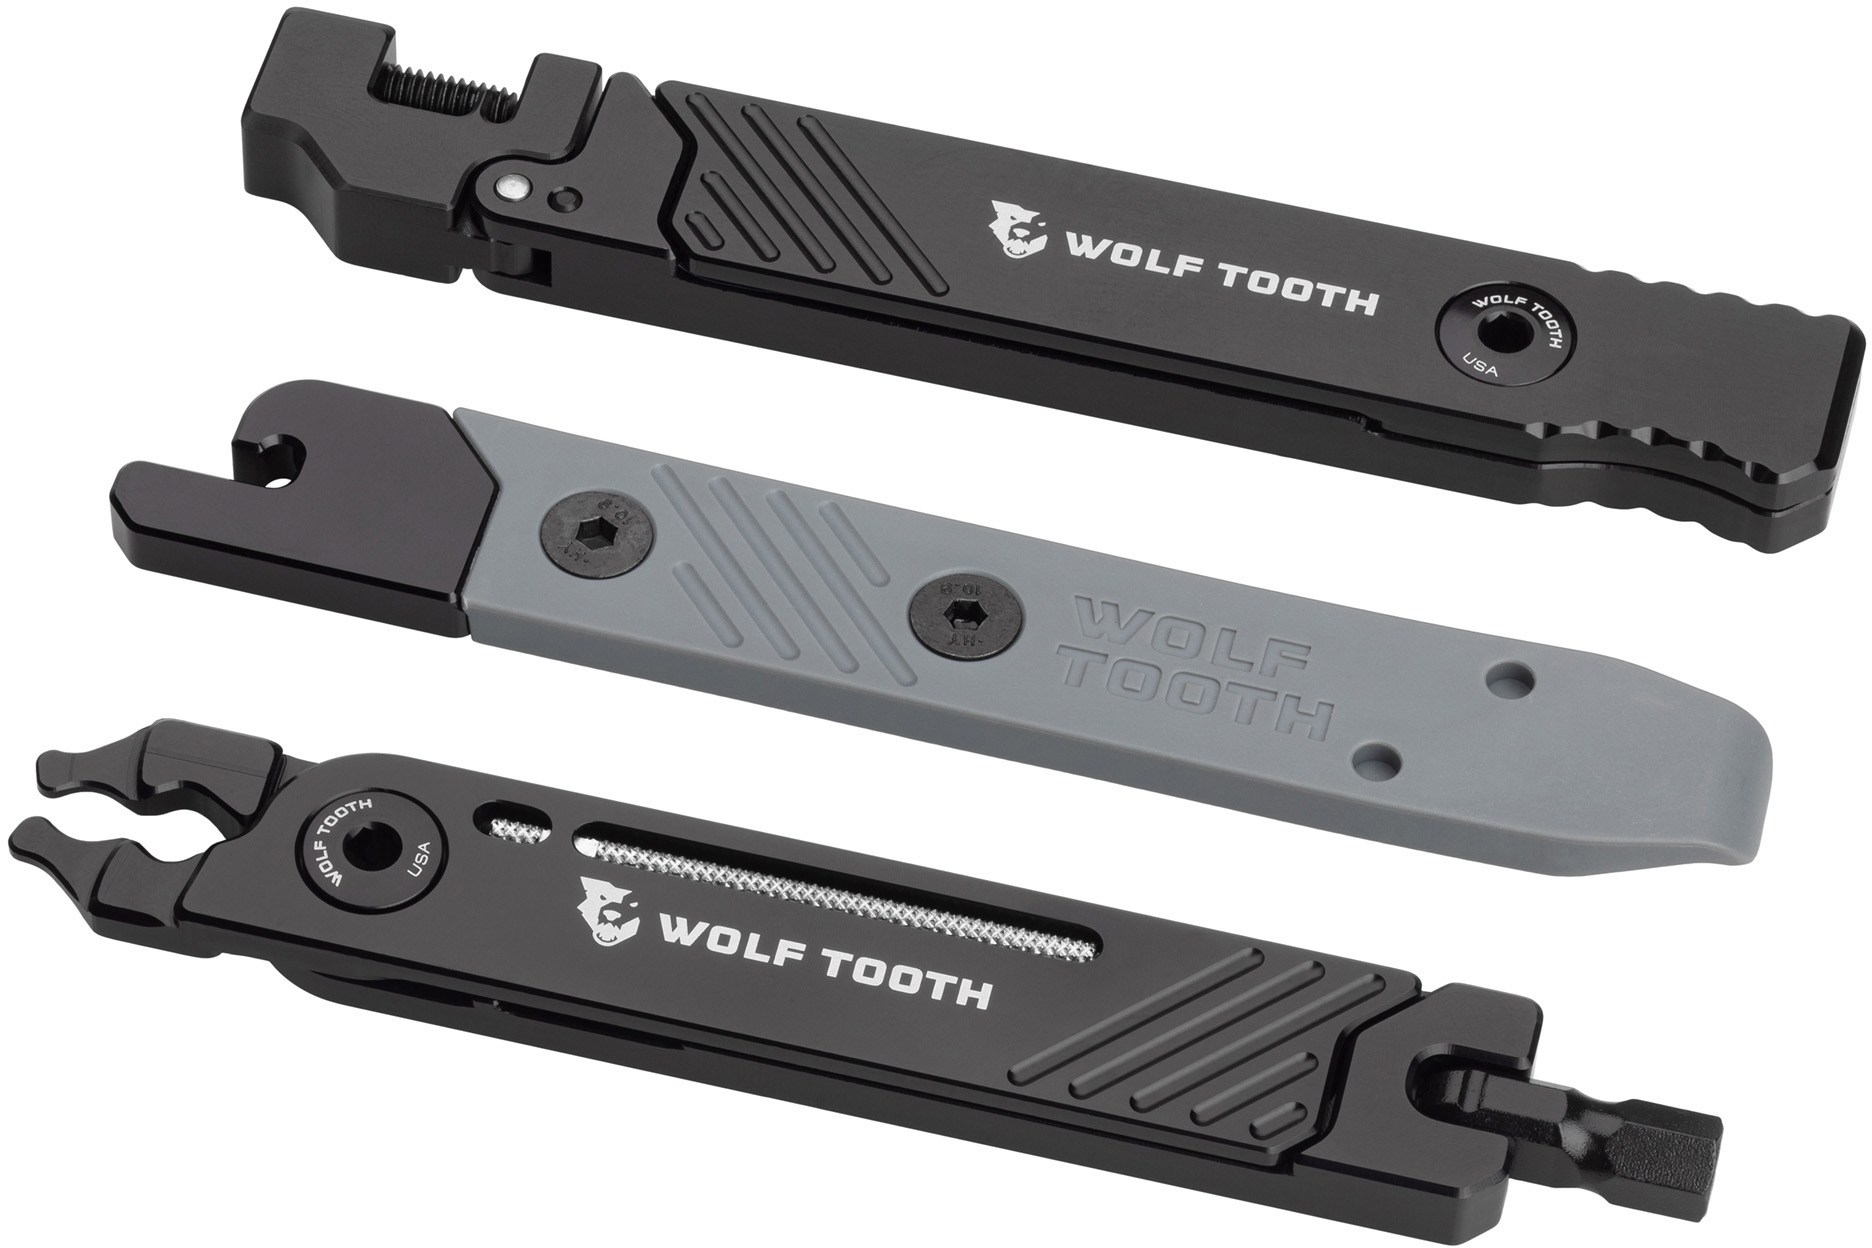 8-битный комплект, набор многофункциональных инструментов для одного велосипеда Wolf Tooth Components, черный electronic components package diode assorted kit 1n4148 1n4007 1n5819 1n5399 1n5408 1n5822 fr107 fr207 8 value 100pcs